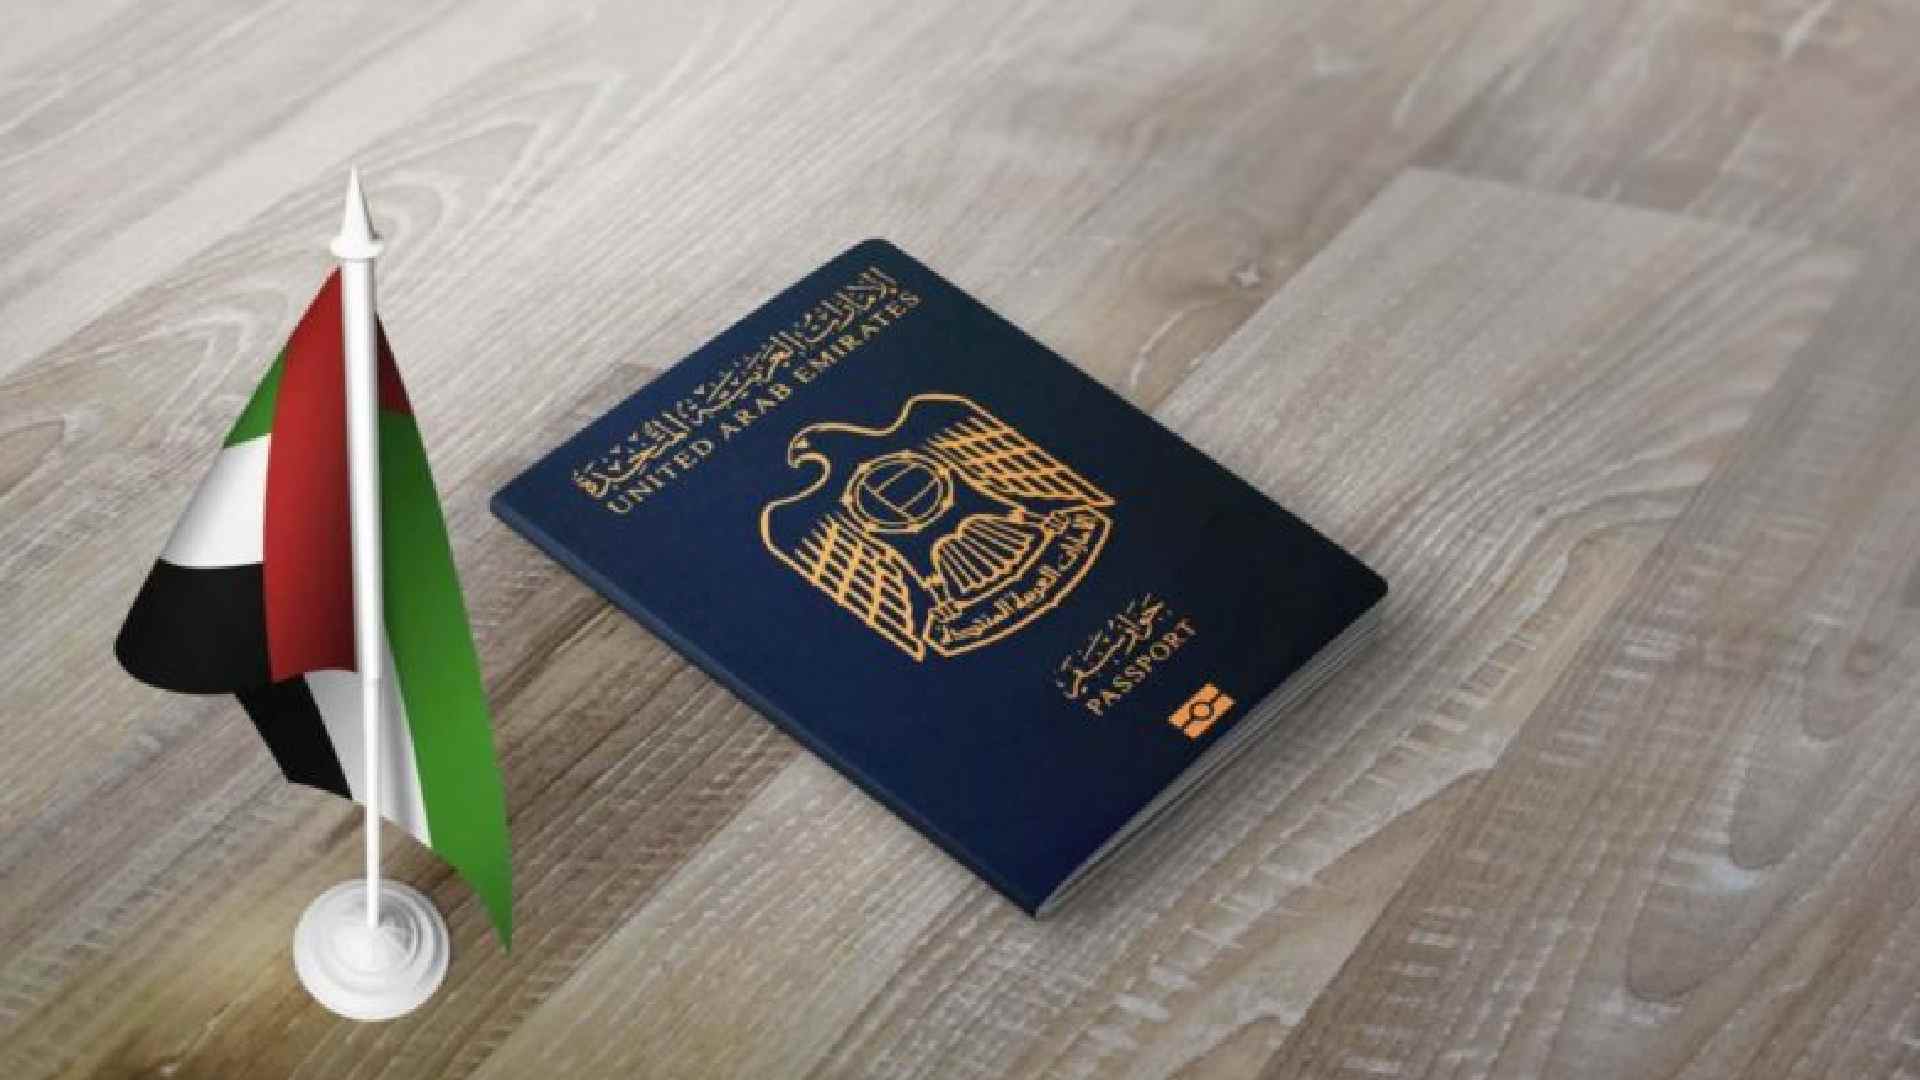 passport renewal Dubai